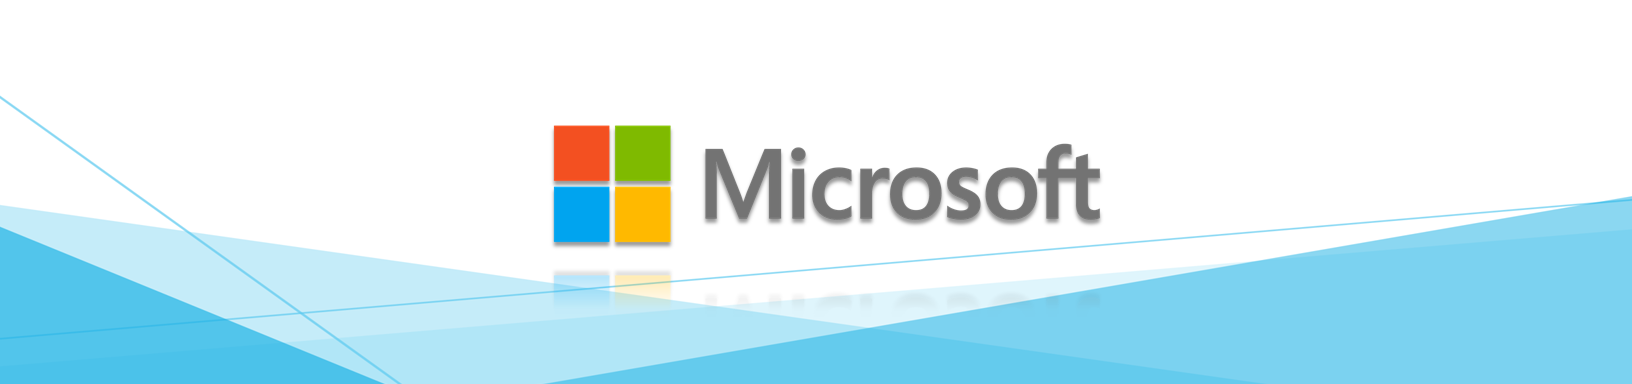 Microsoft-Banner